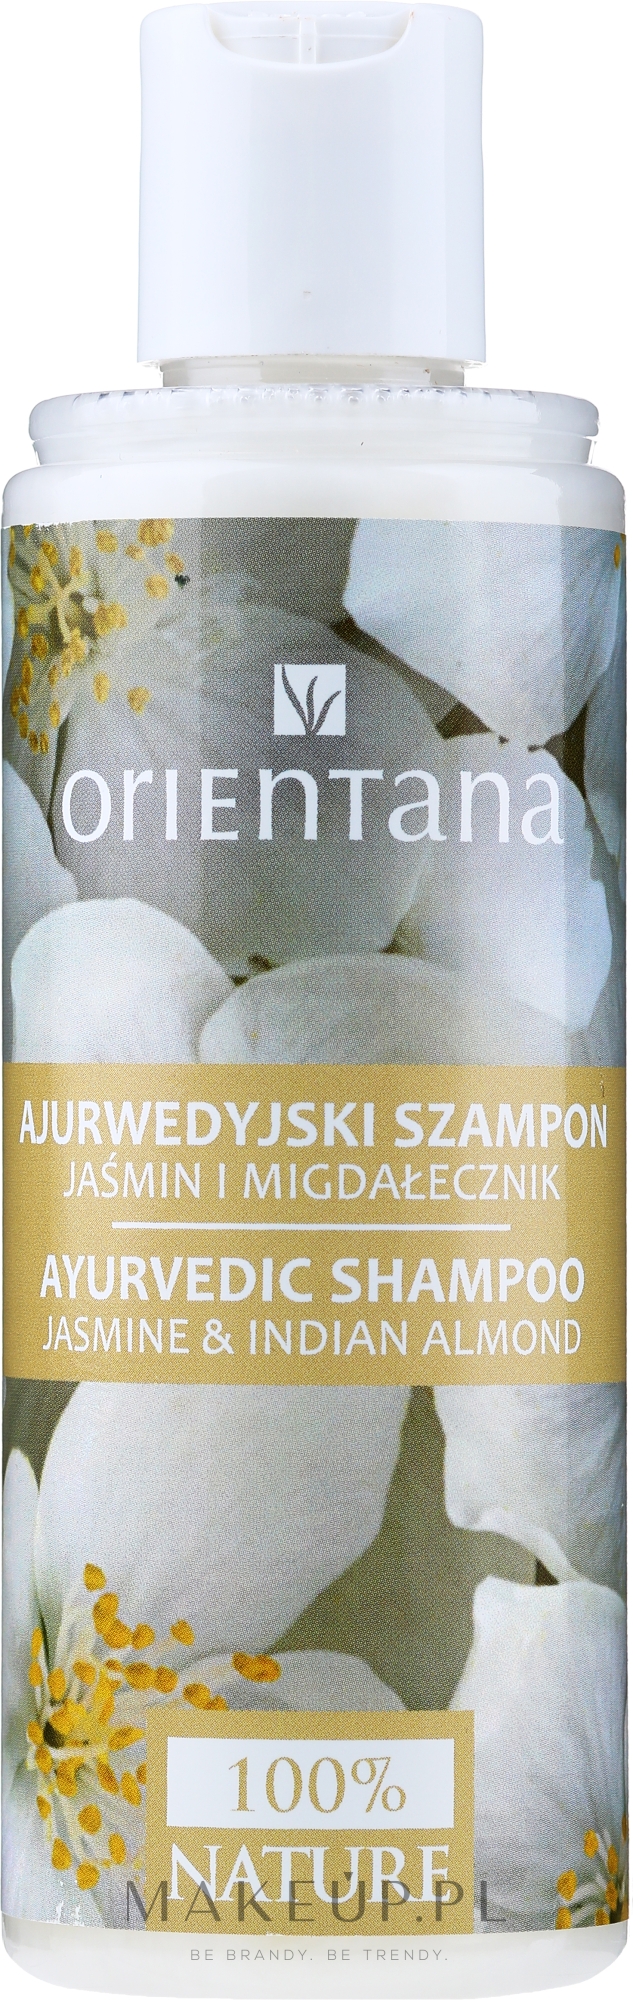 szampon orientana hebe